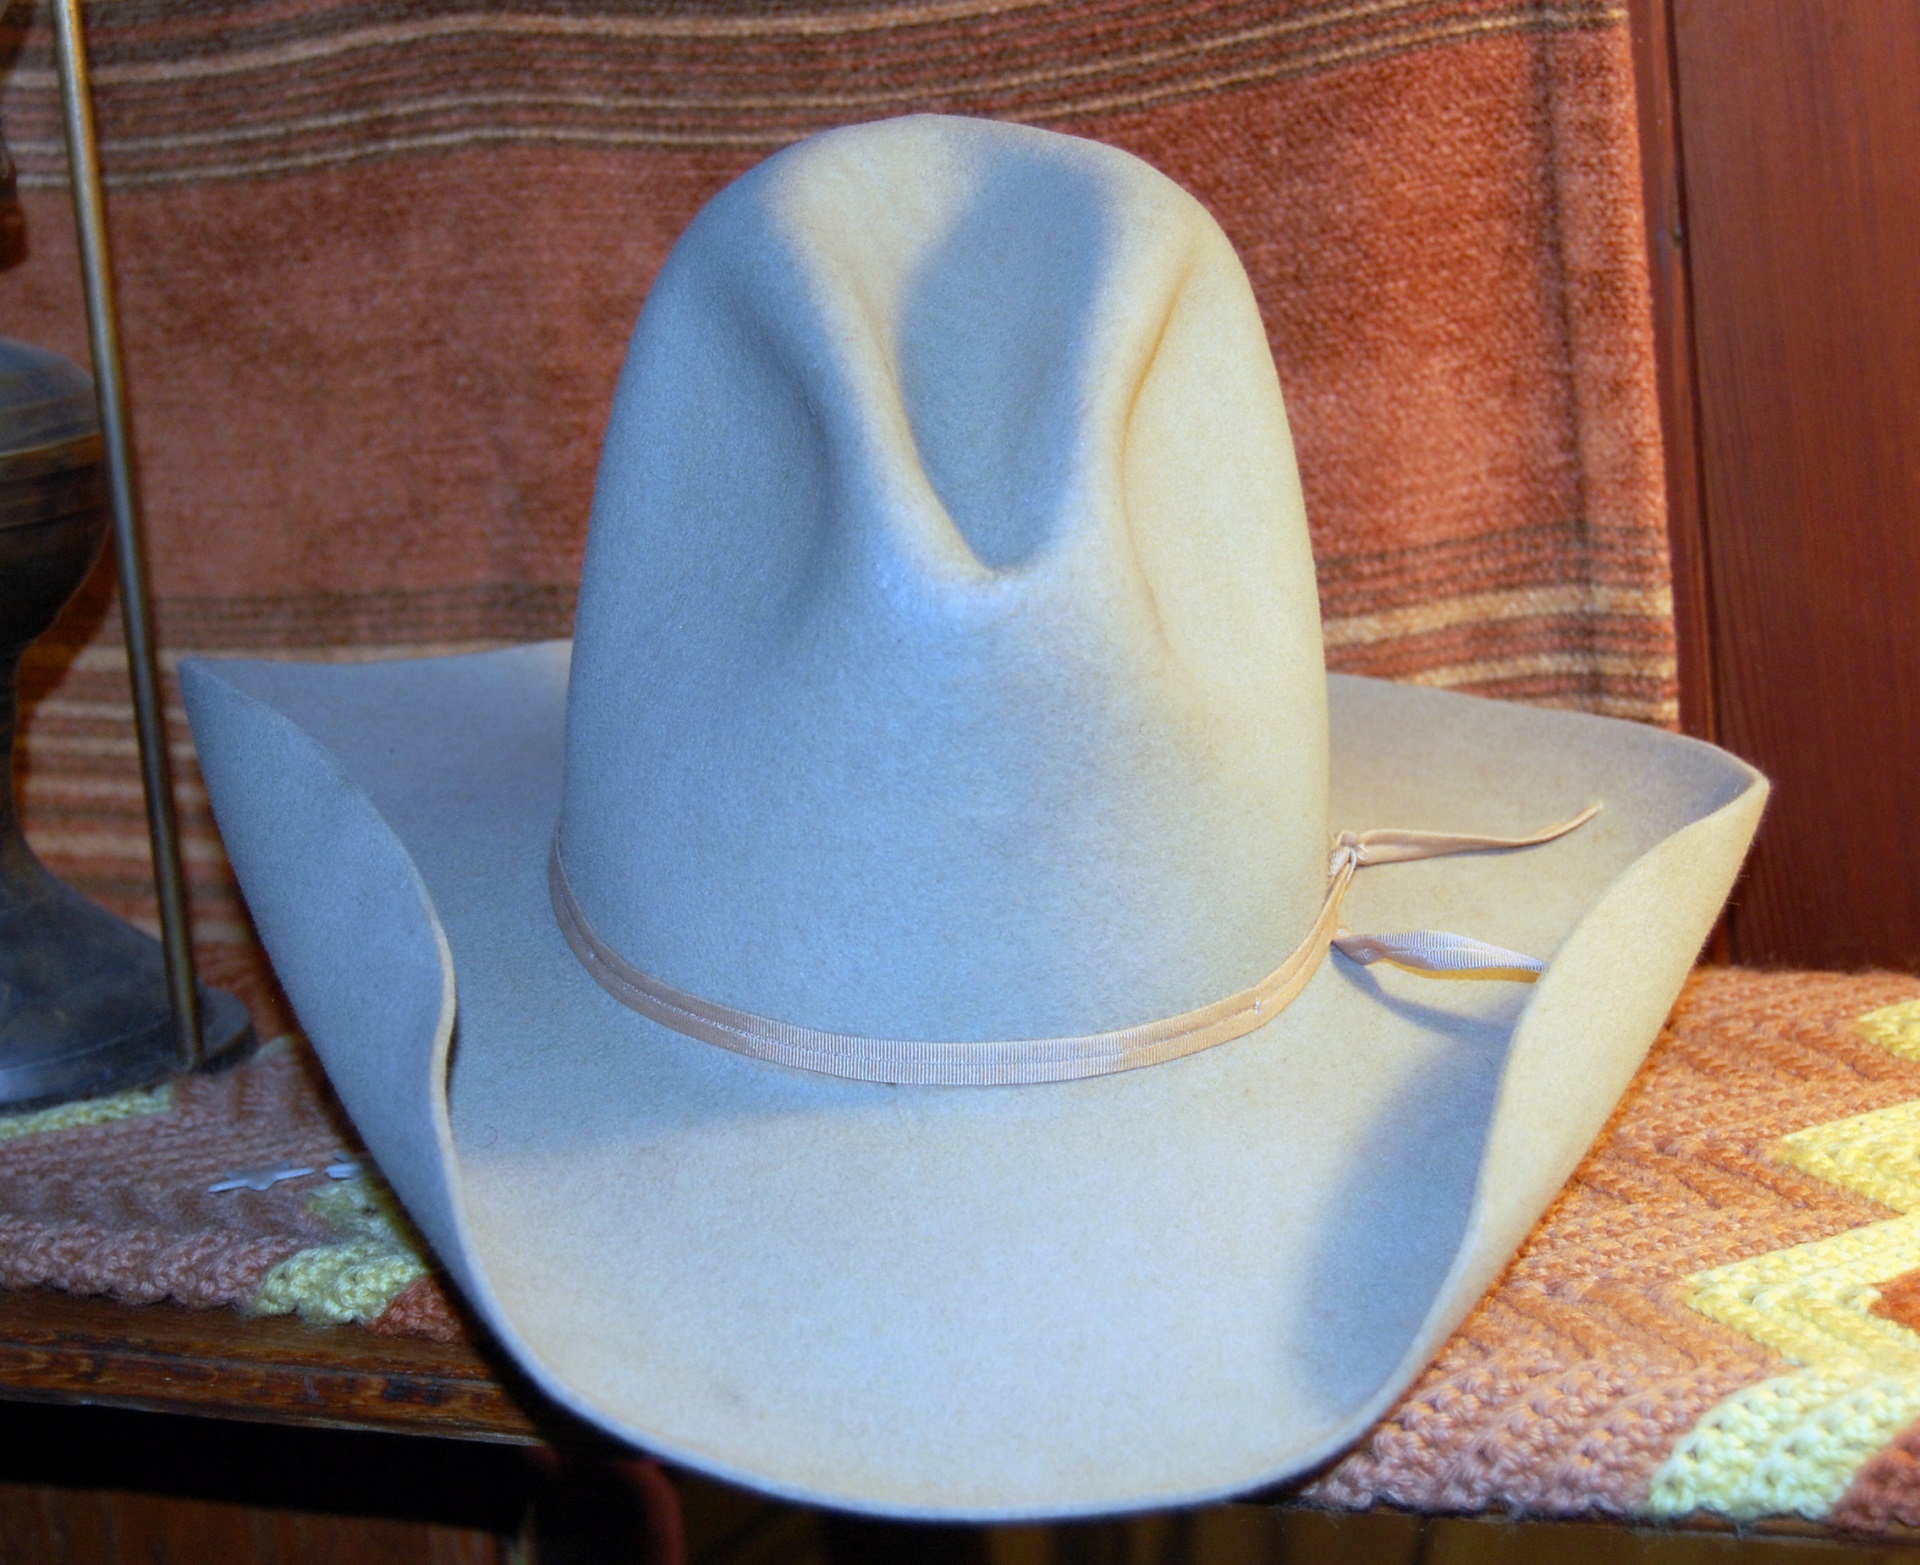 Cowboy hat by skeeze